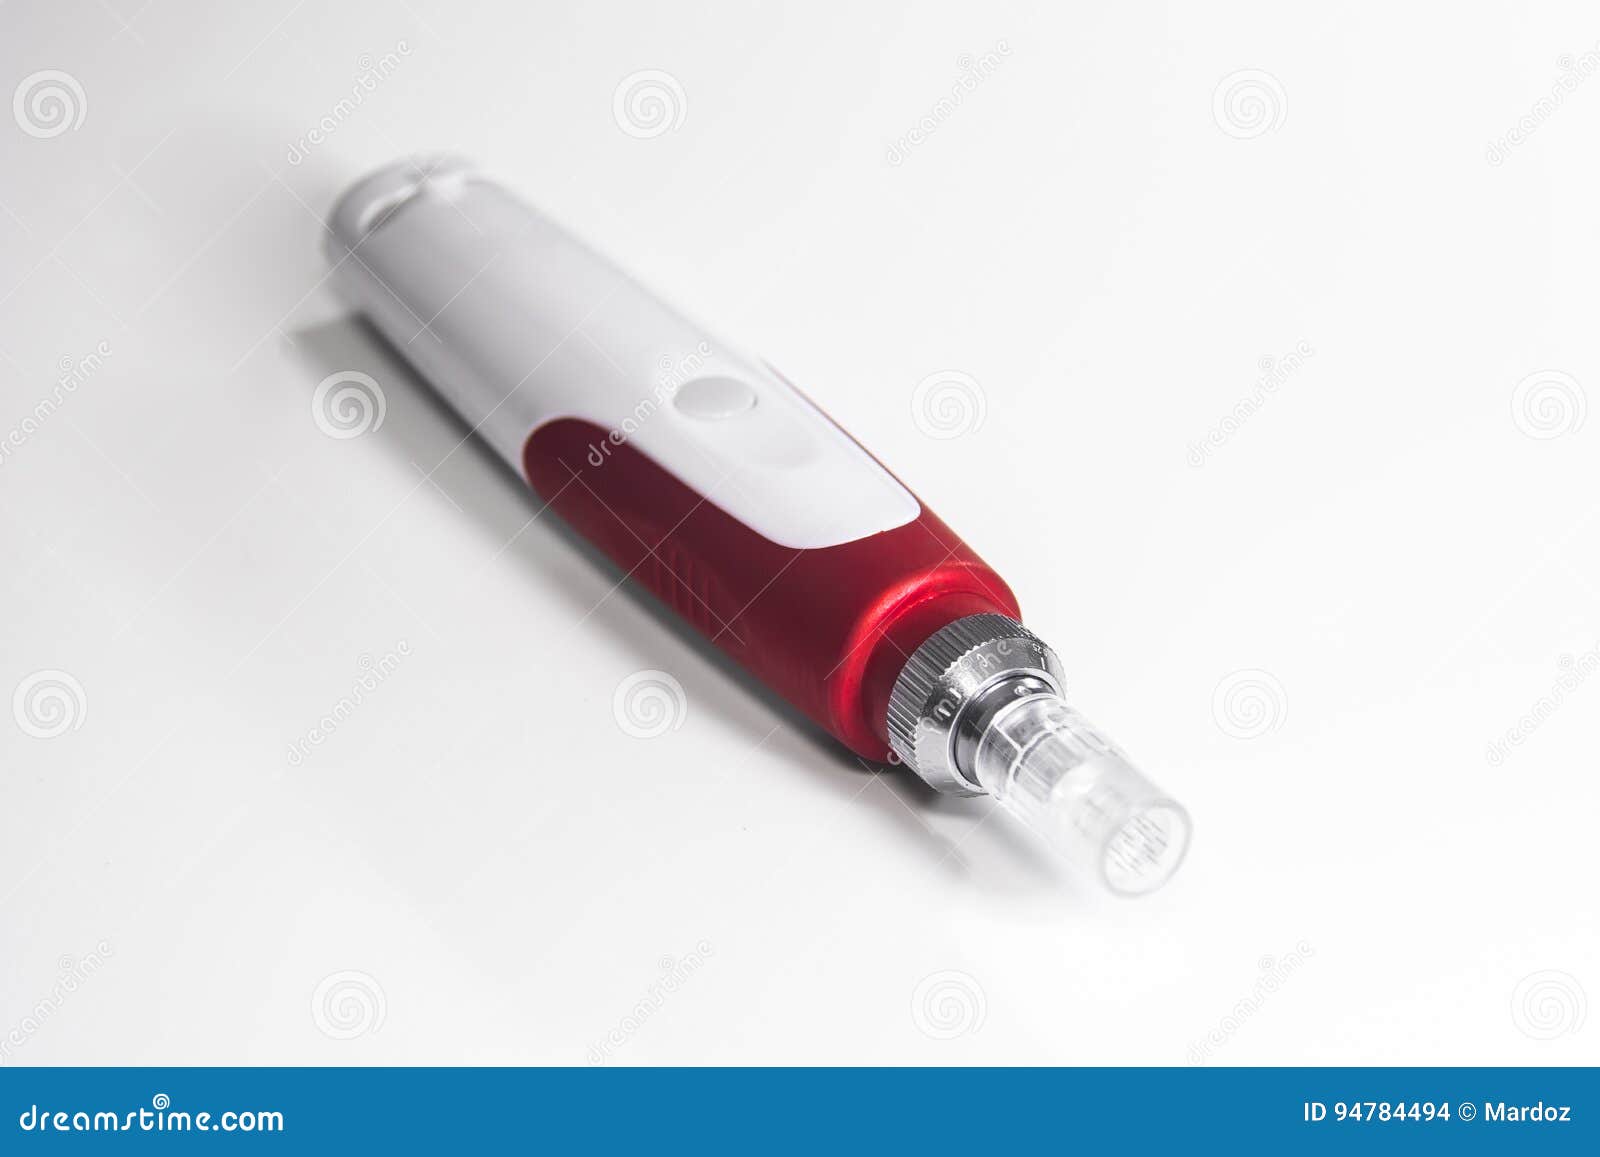 dermis needle therapy pen